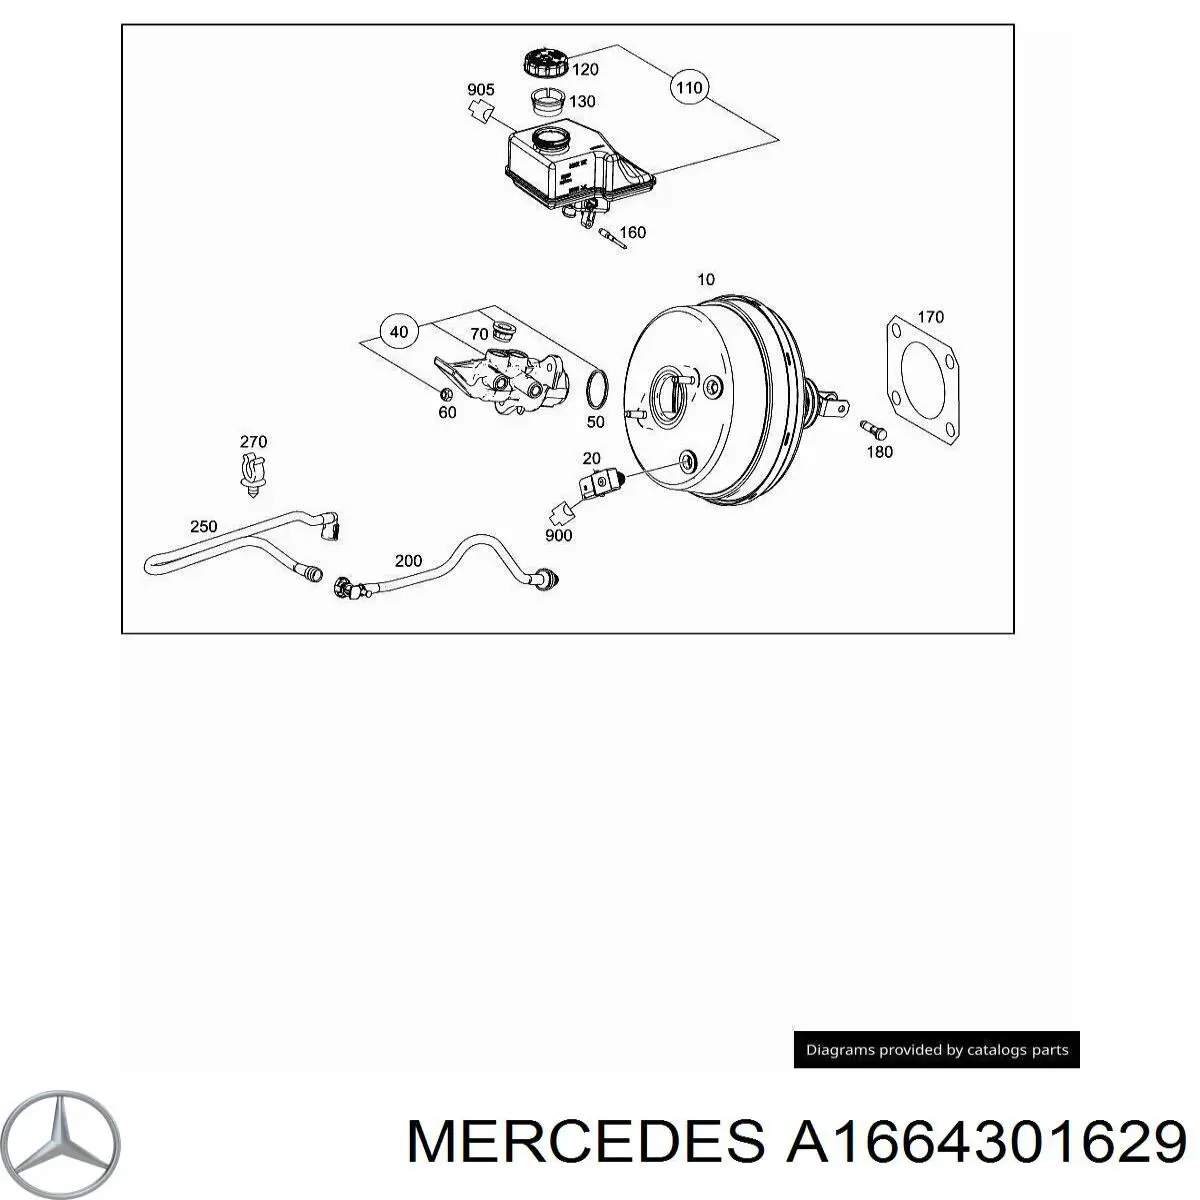 A1664301629 Mercedes